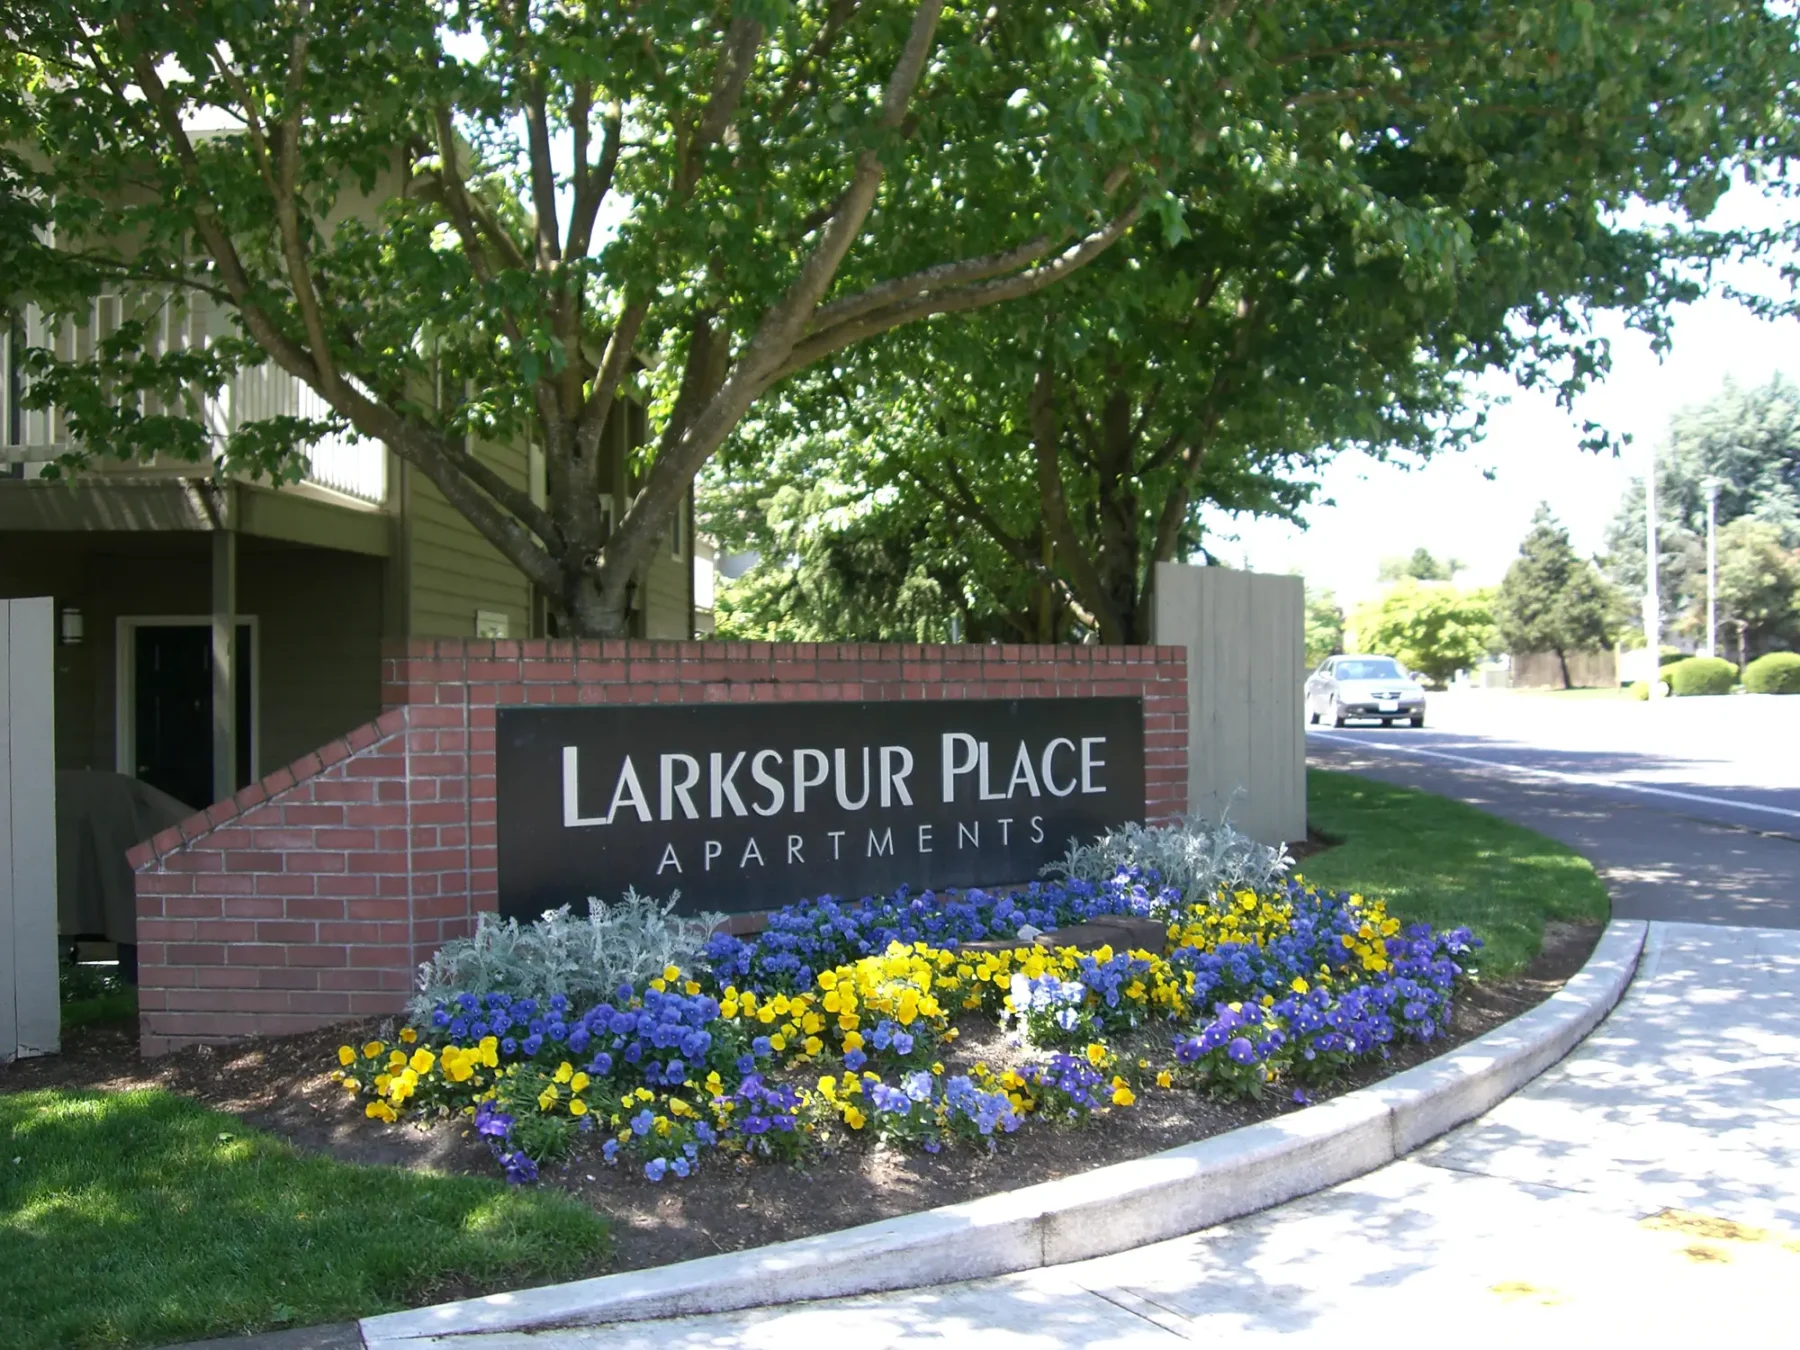 Brick monument sign for Larkspur Place apartments